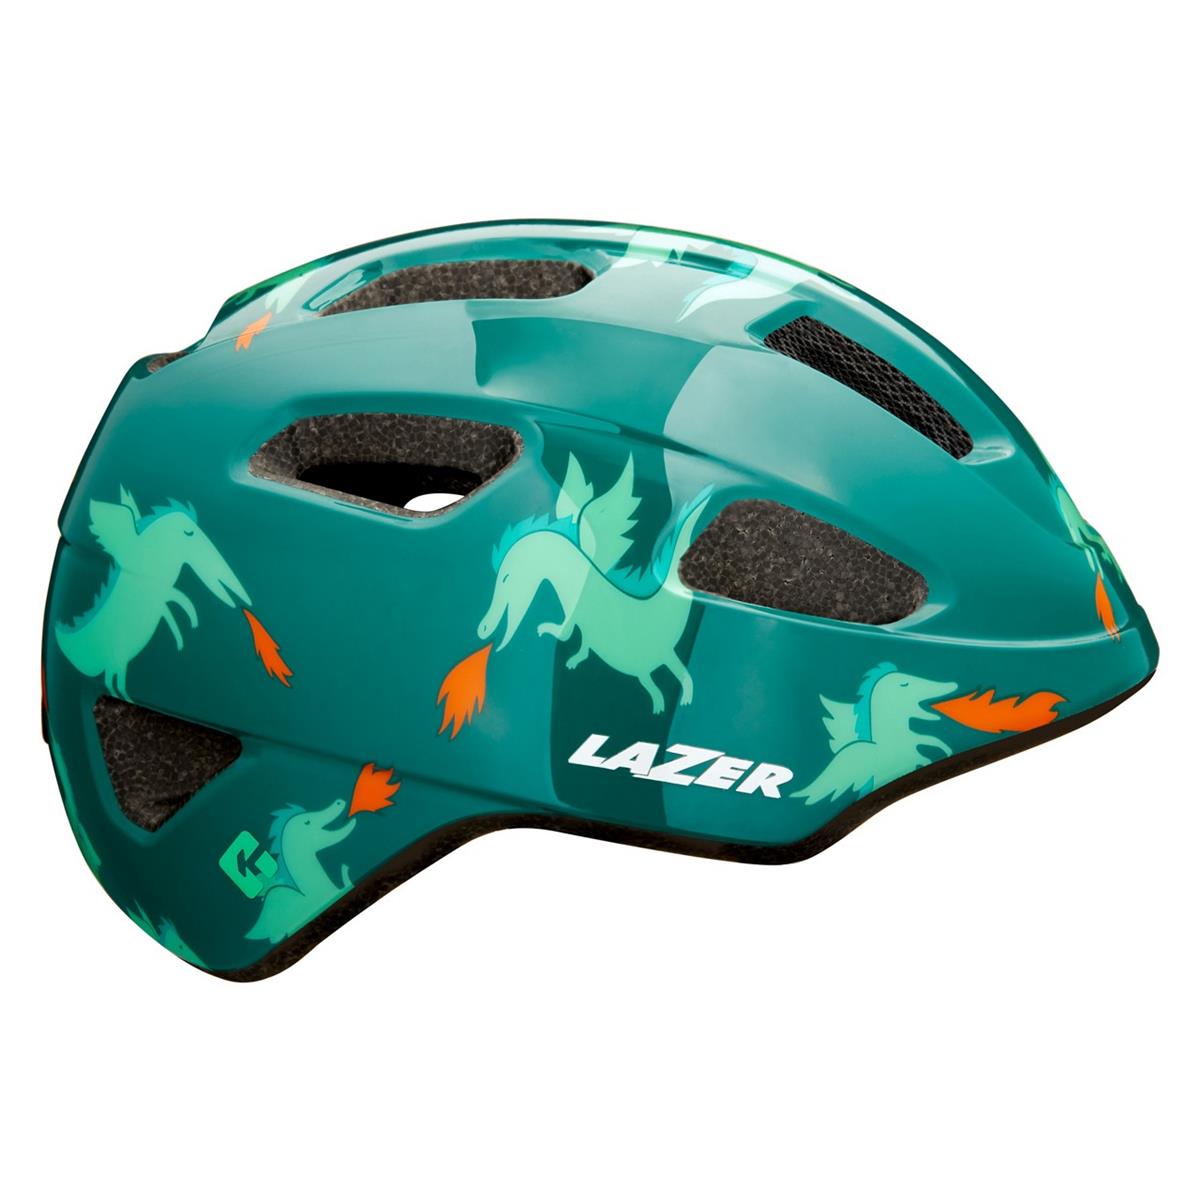 Nutz Kids Helmet KinetiCore CE Dragon Green One Size (50-56cm)